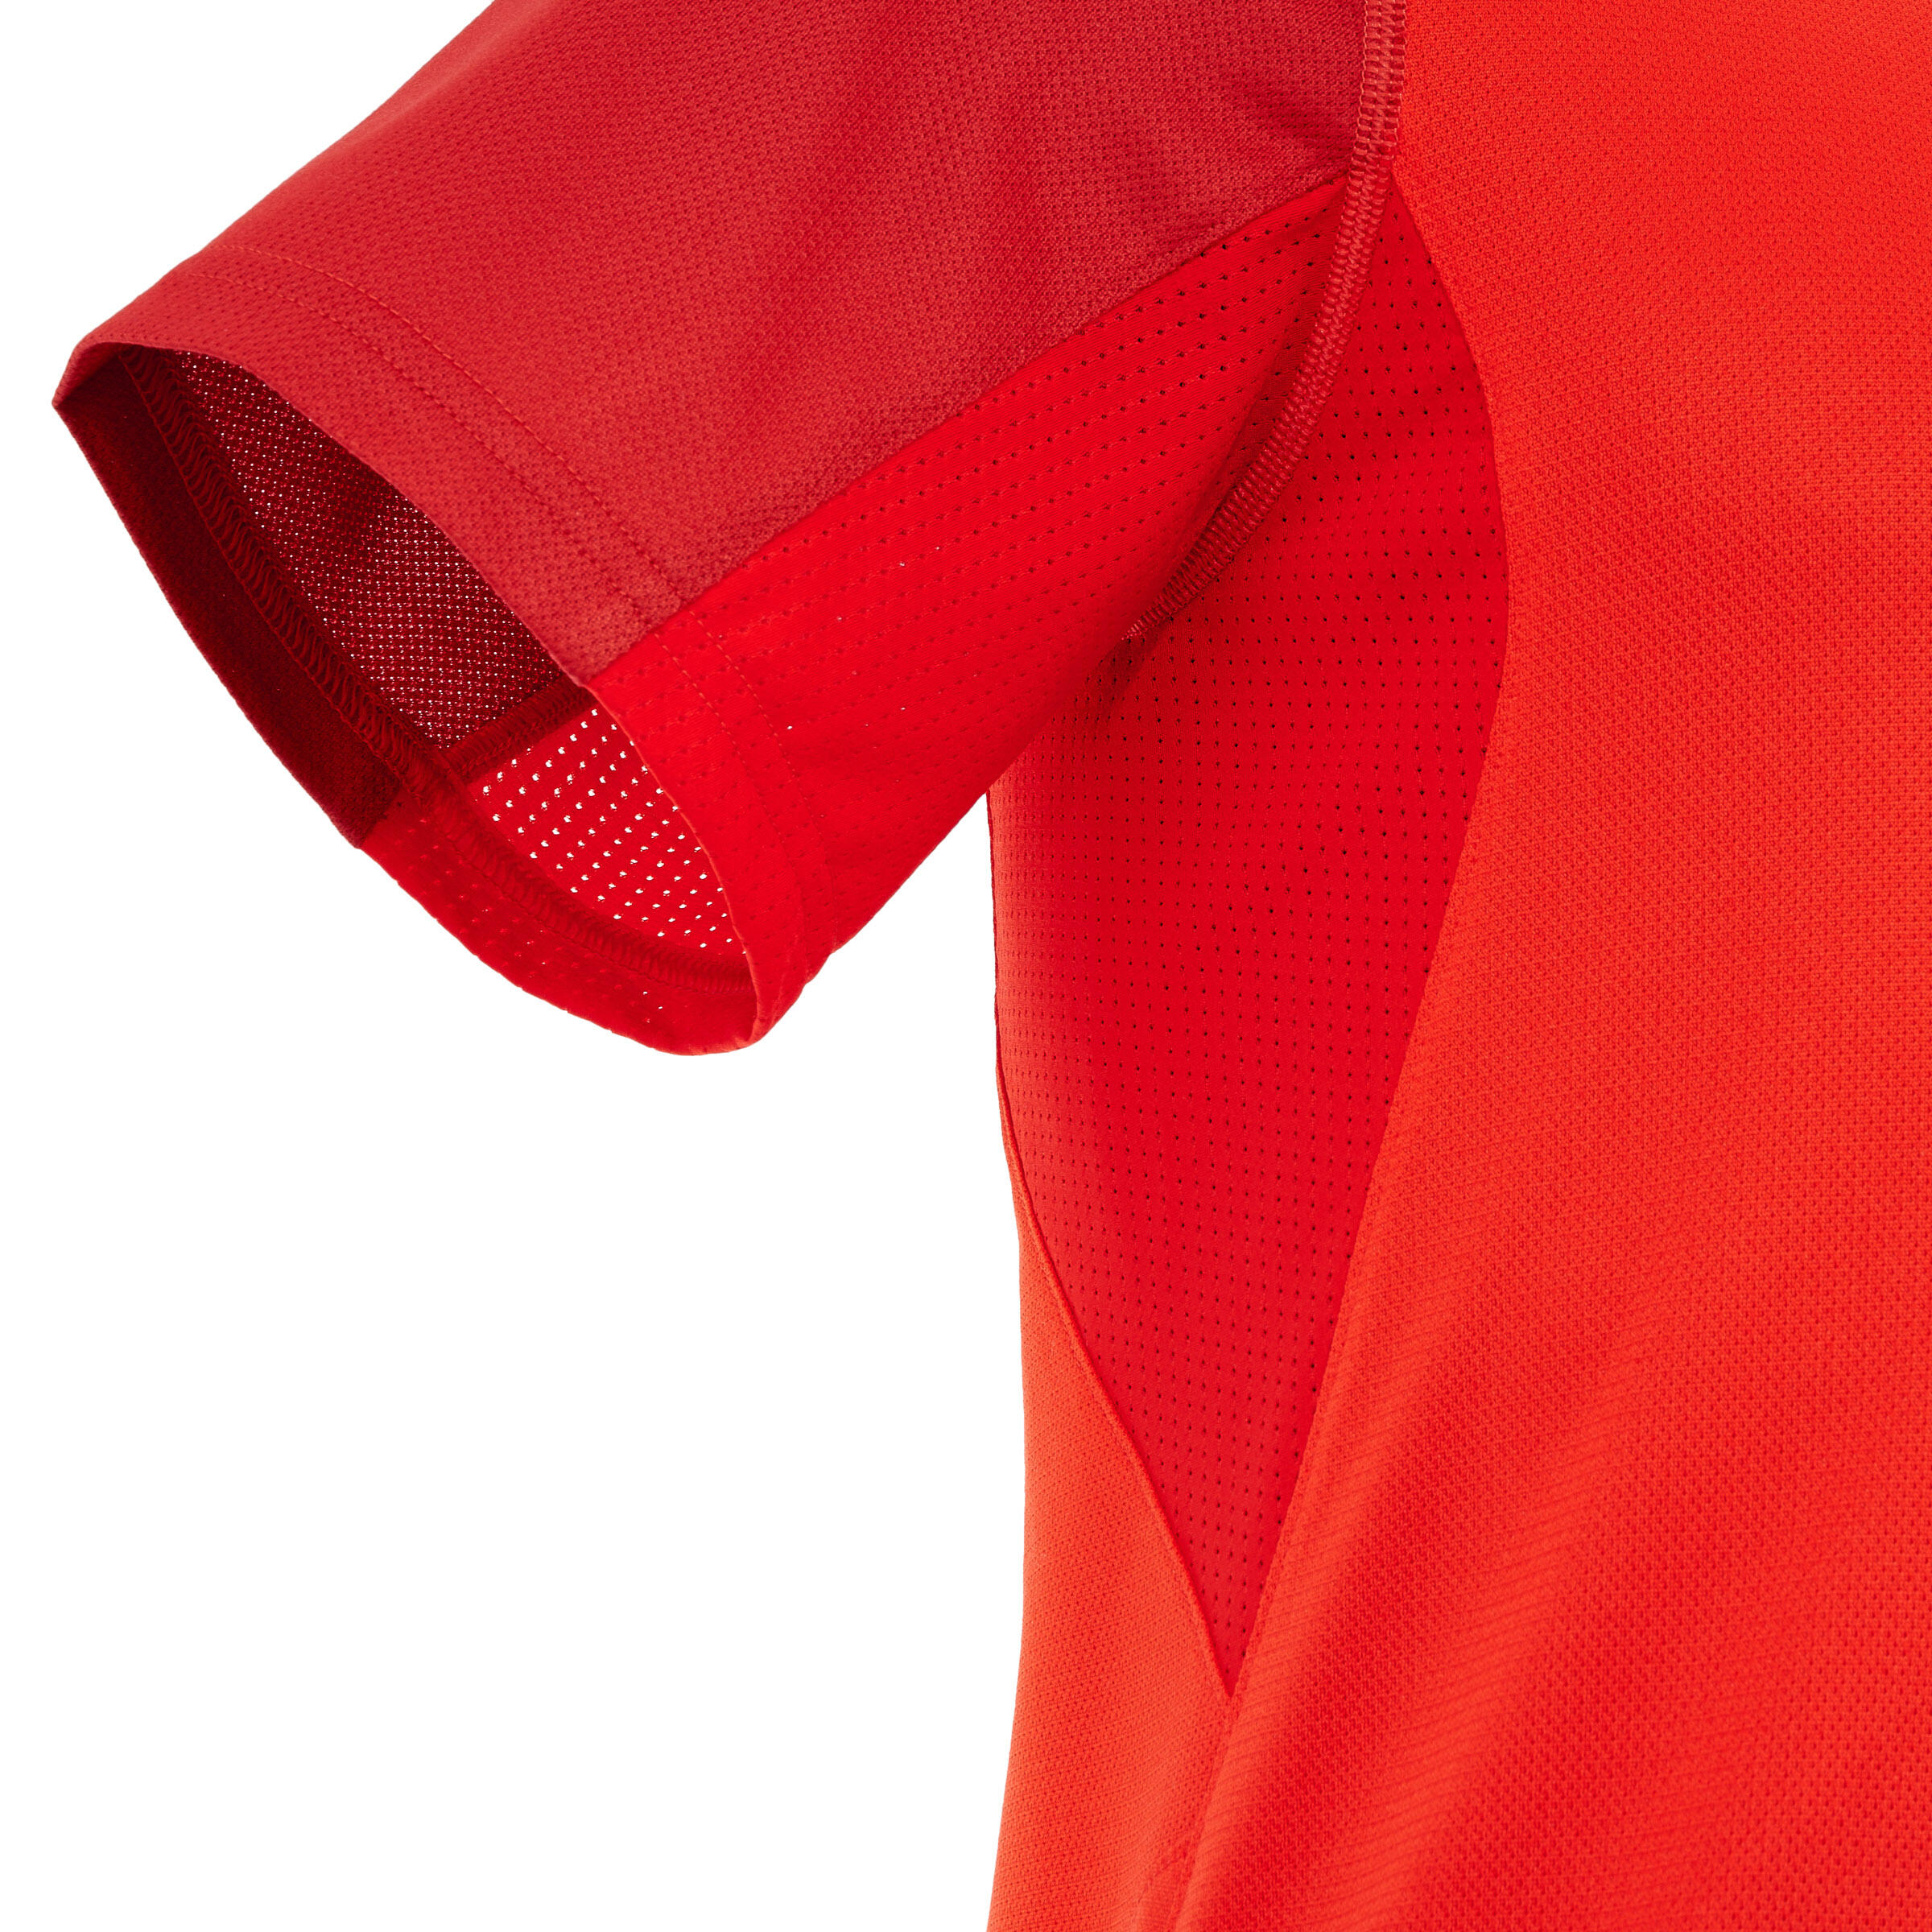 TechFRESH 100 Zip Men's Short-Sleeved Hiking T-Shirt - Red 7/11